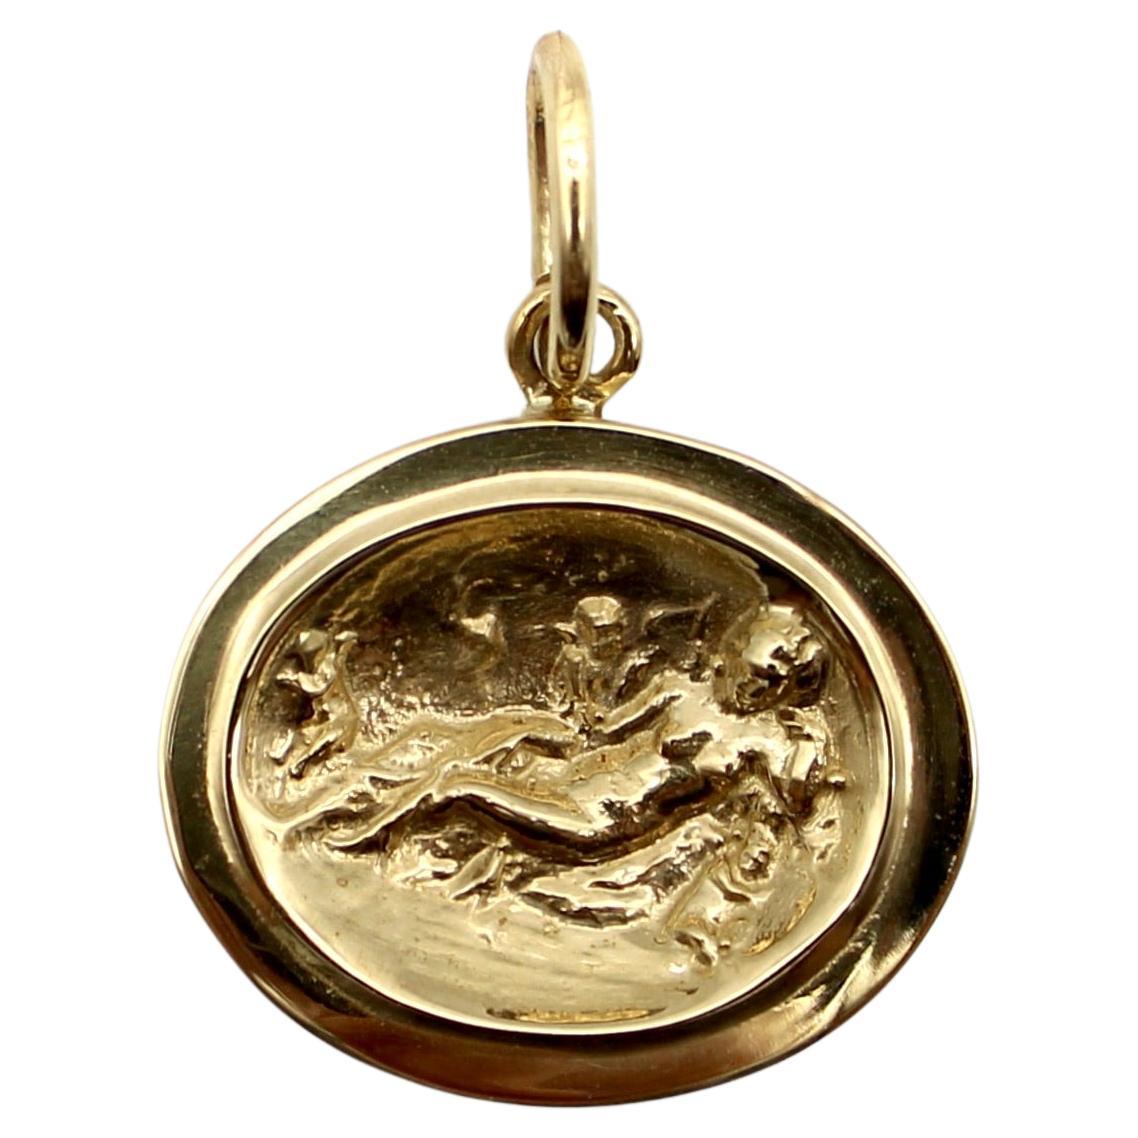 Aphrodite-Medaillon aus 14 Karat Gold im klassischen Revival-Stil